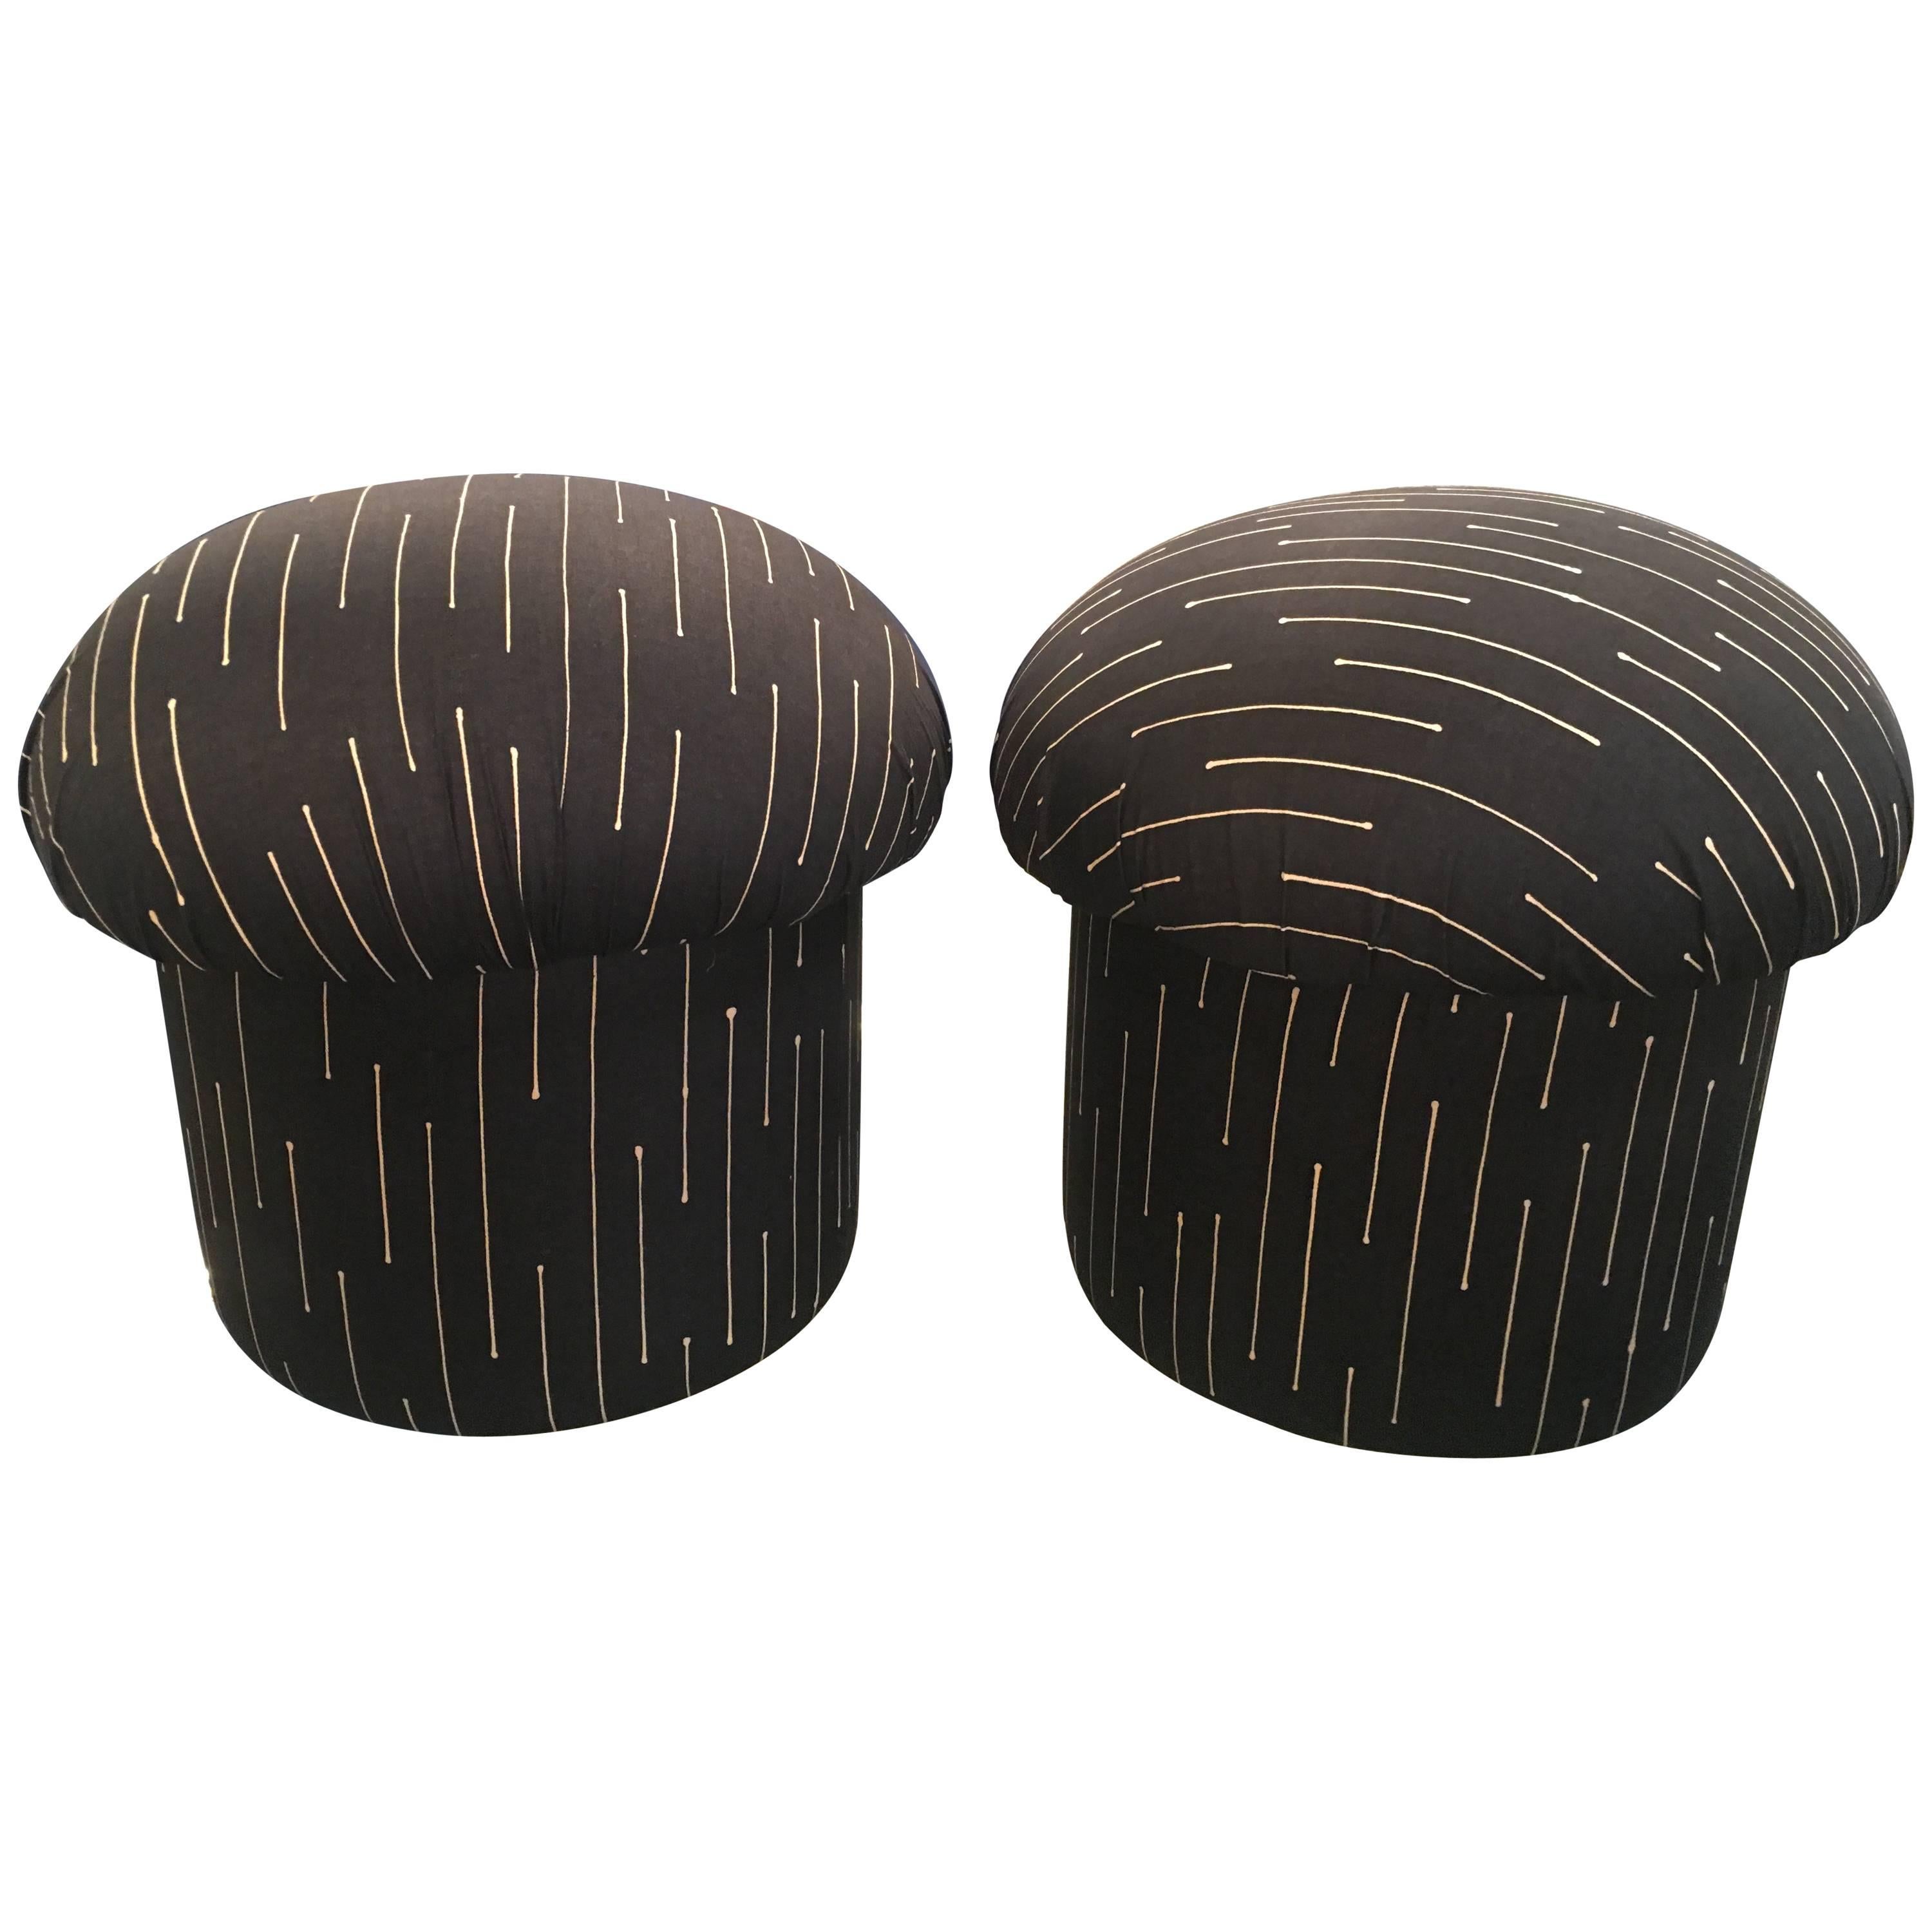 Pair of Retro Mushroom Poufs Ottoman Stools Vintage 1970s Chairs